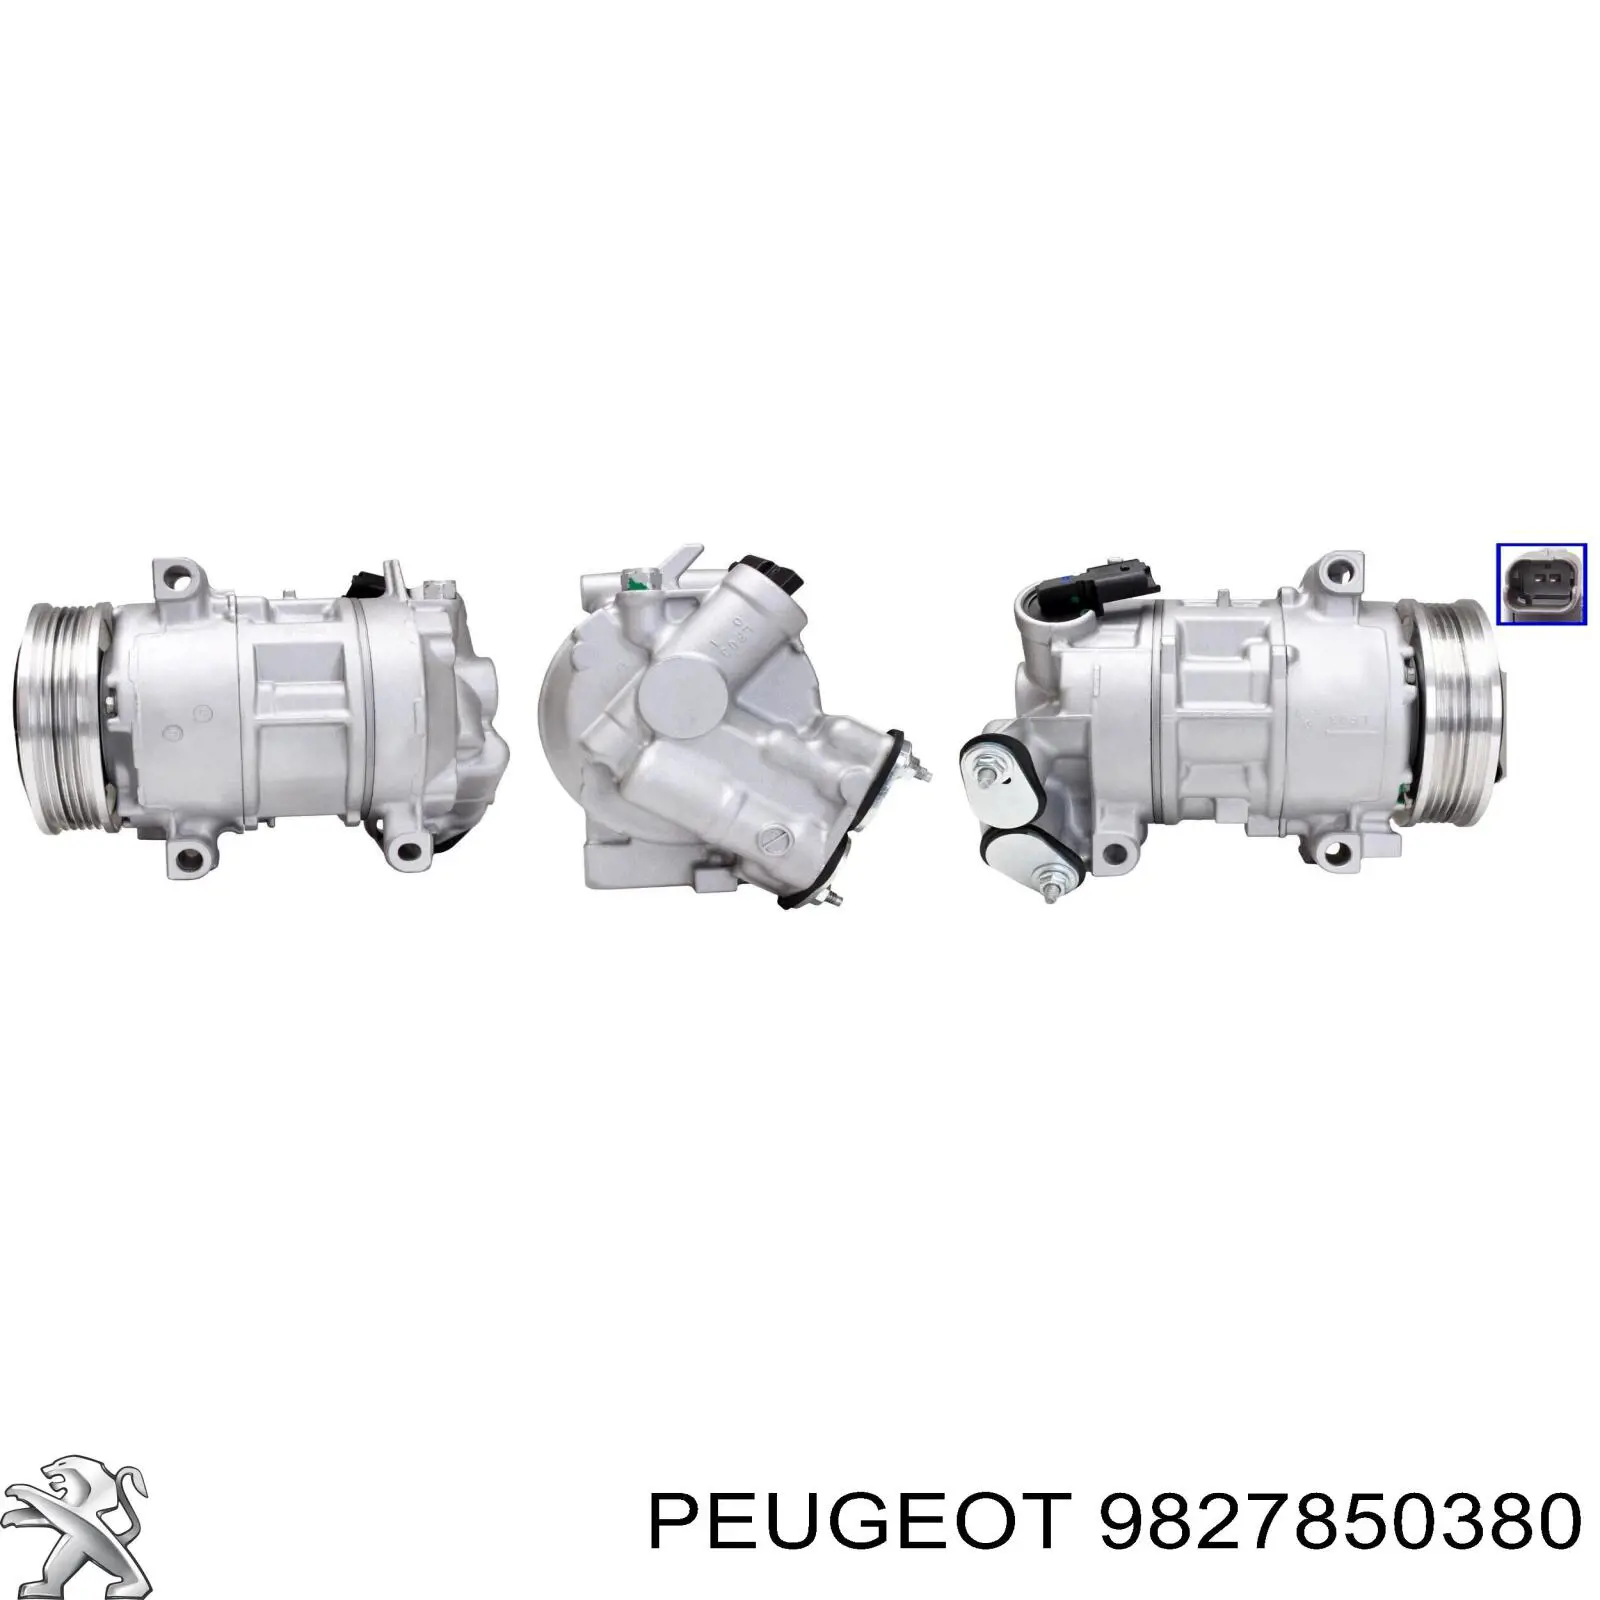 9827850380 Peugeot/Citroen compressor de aparelho de ar condicionado